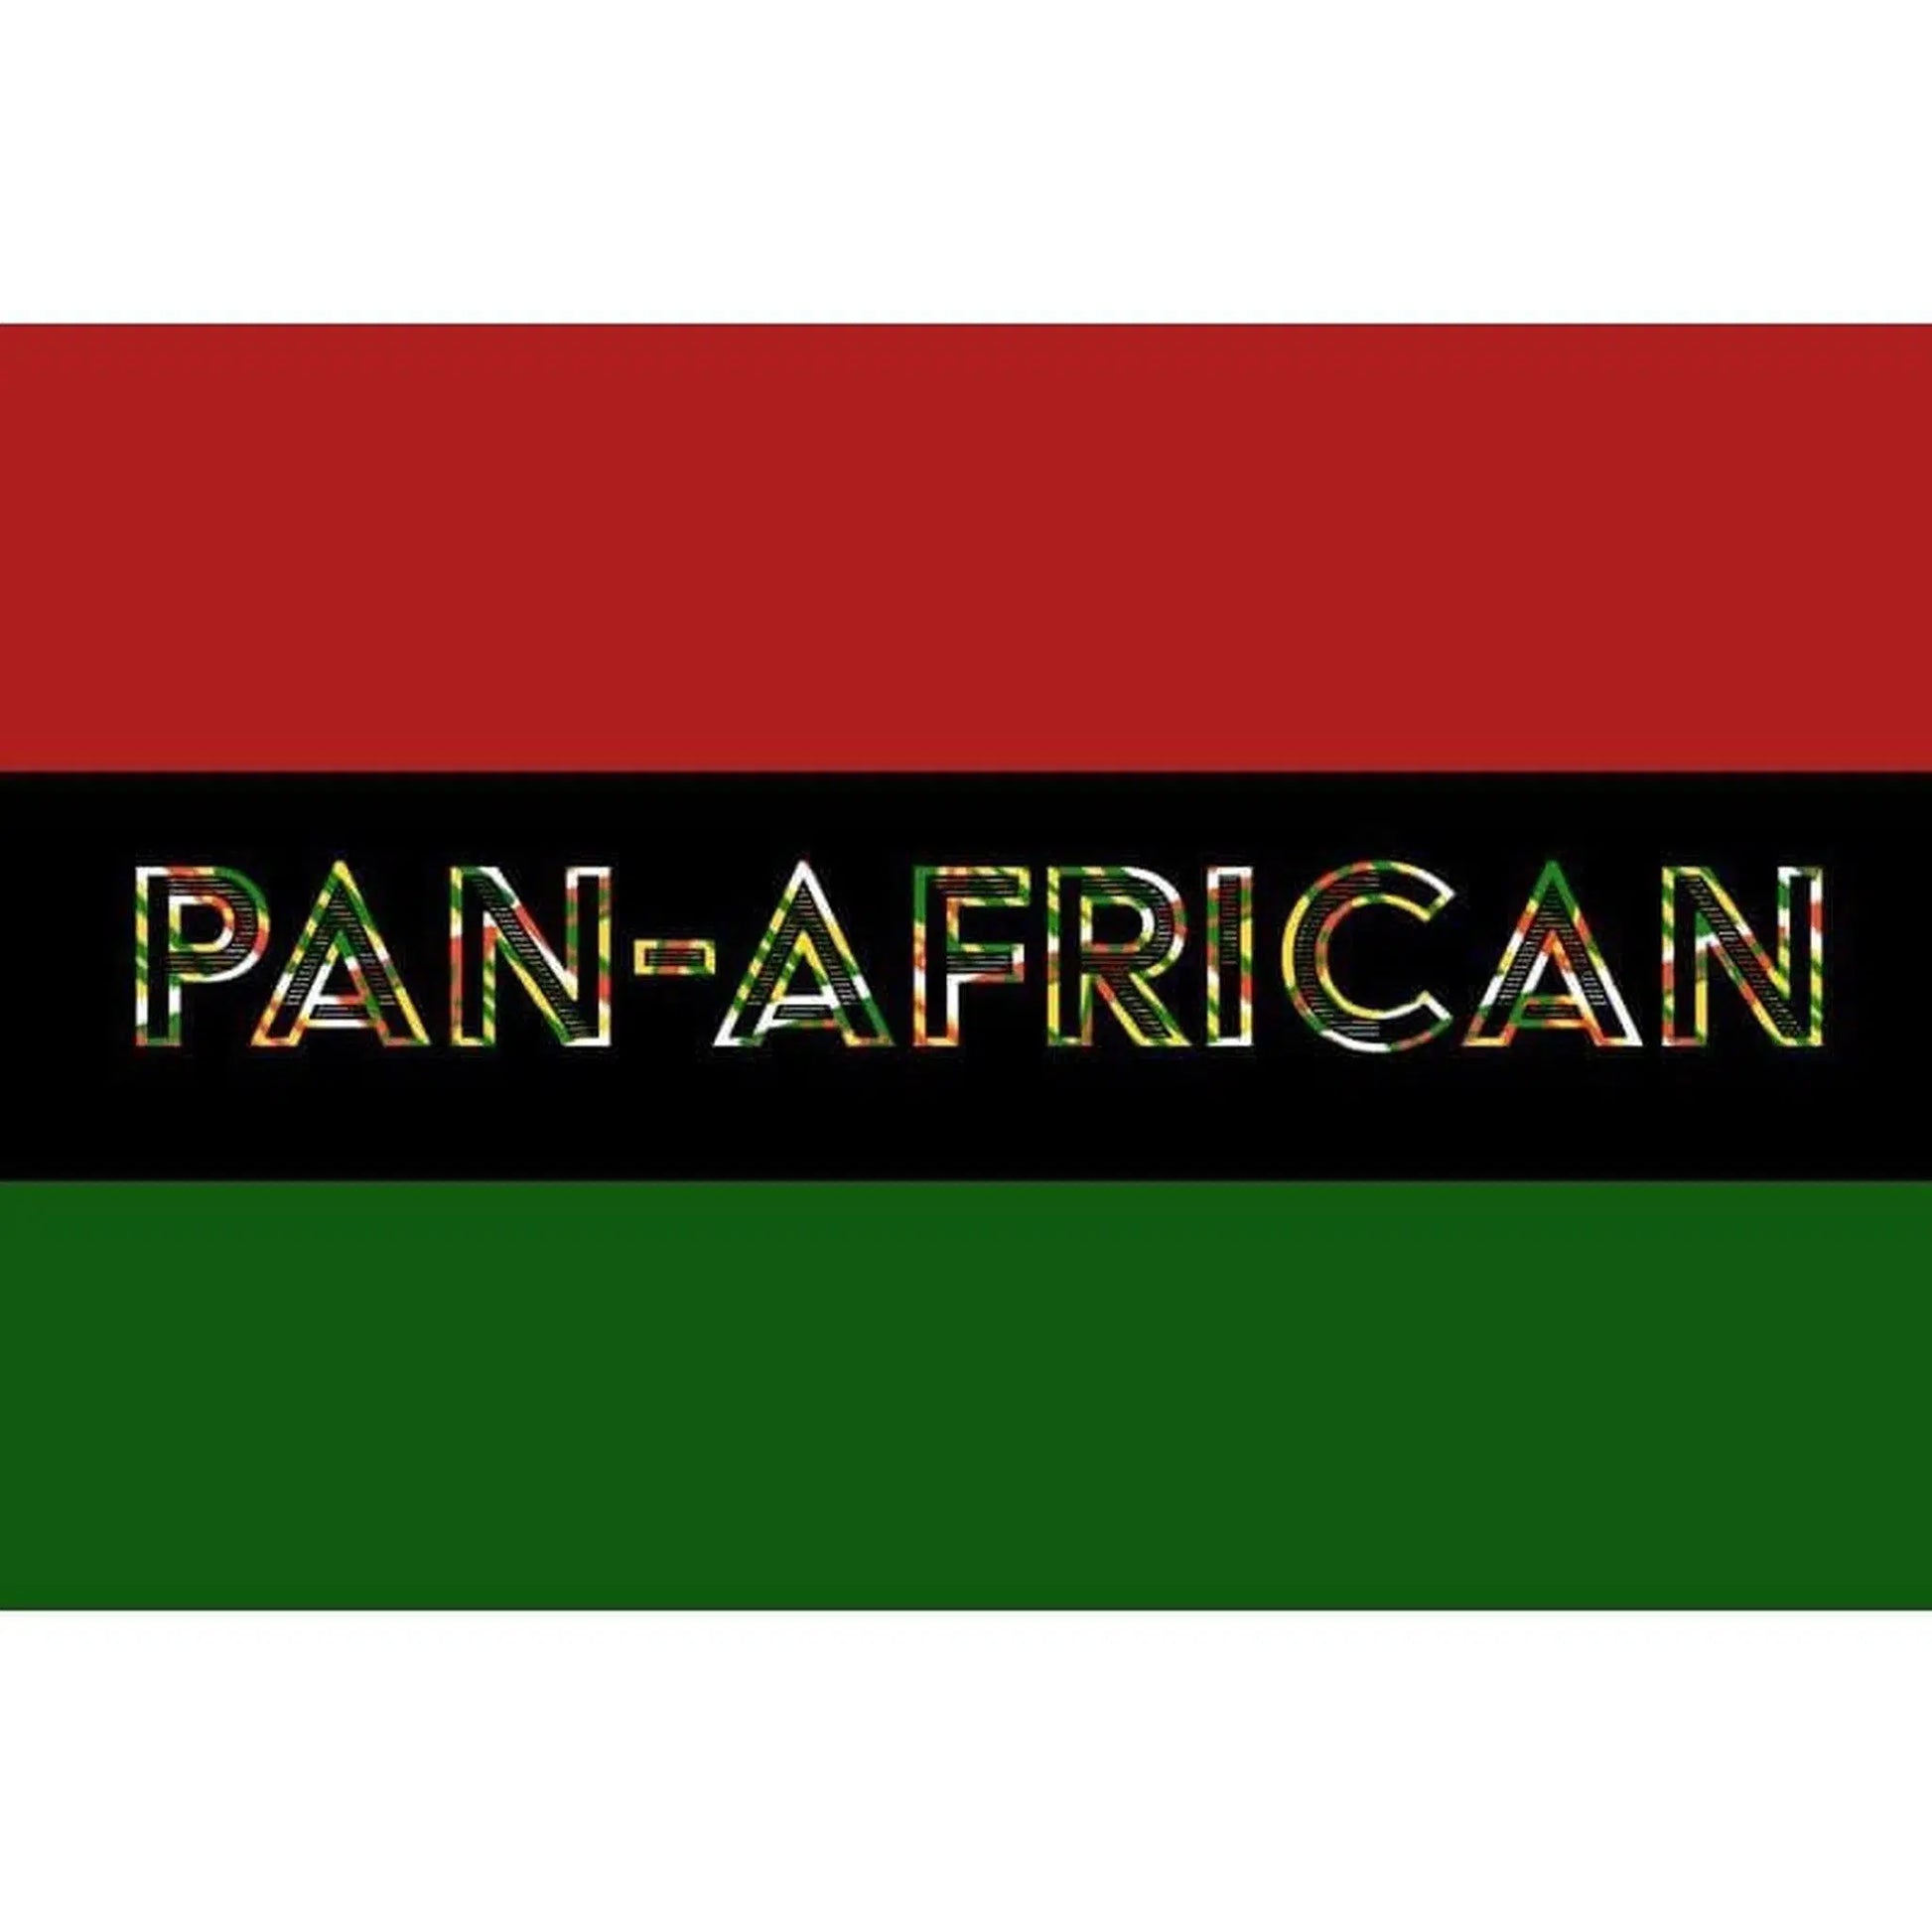 African American T shirts | Pan African T Shirt